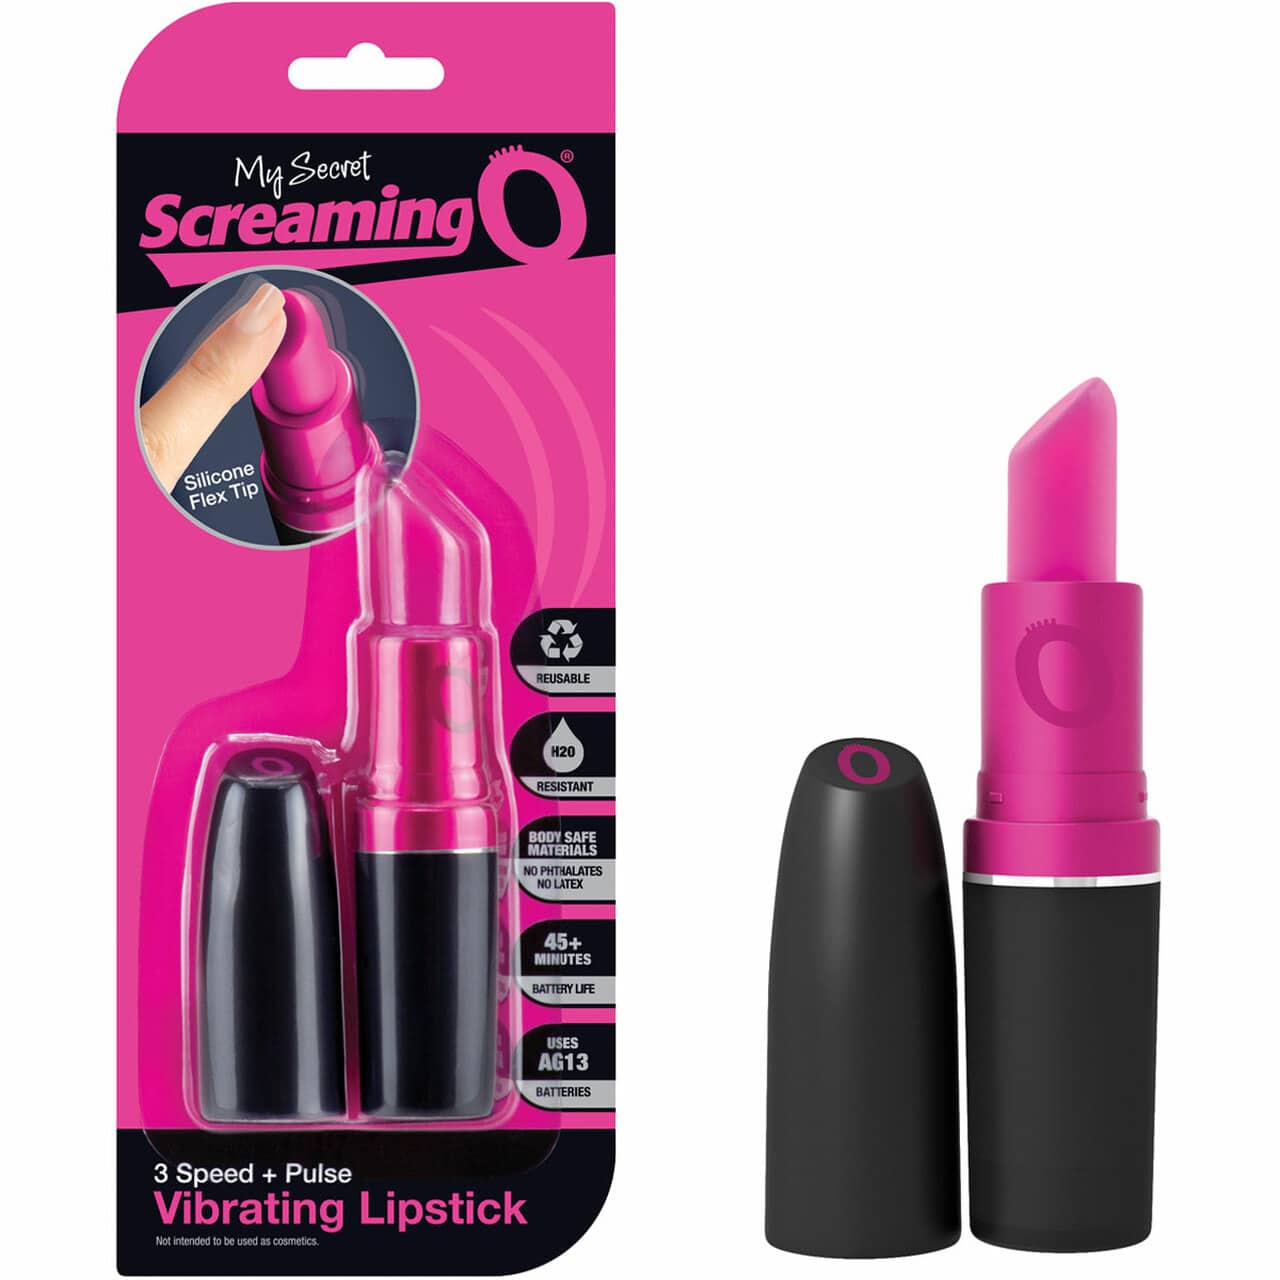 My Secret Screaming O Vibrating Lipstick . Slide 3